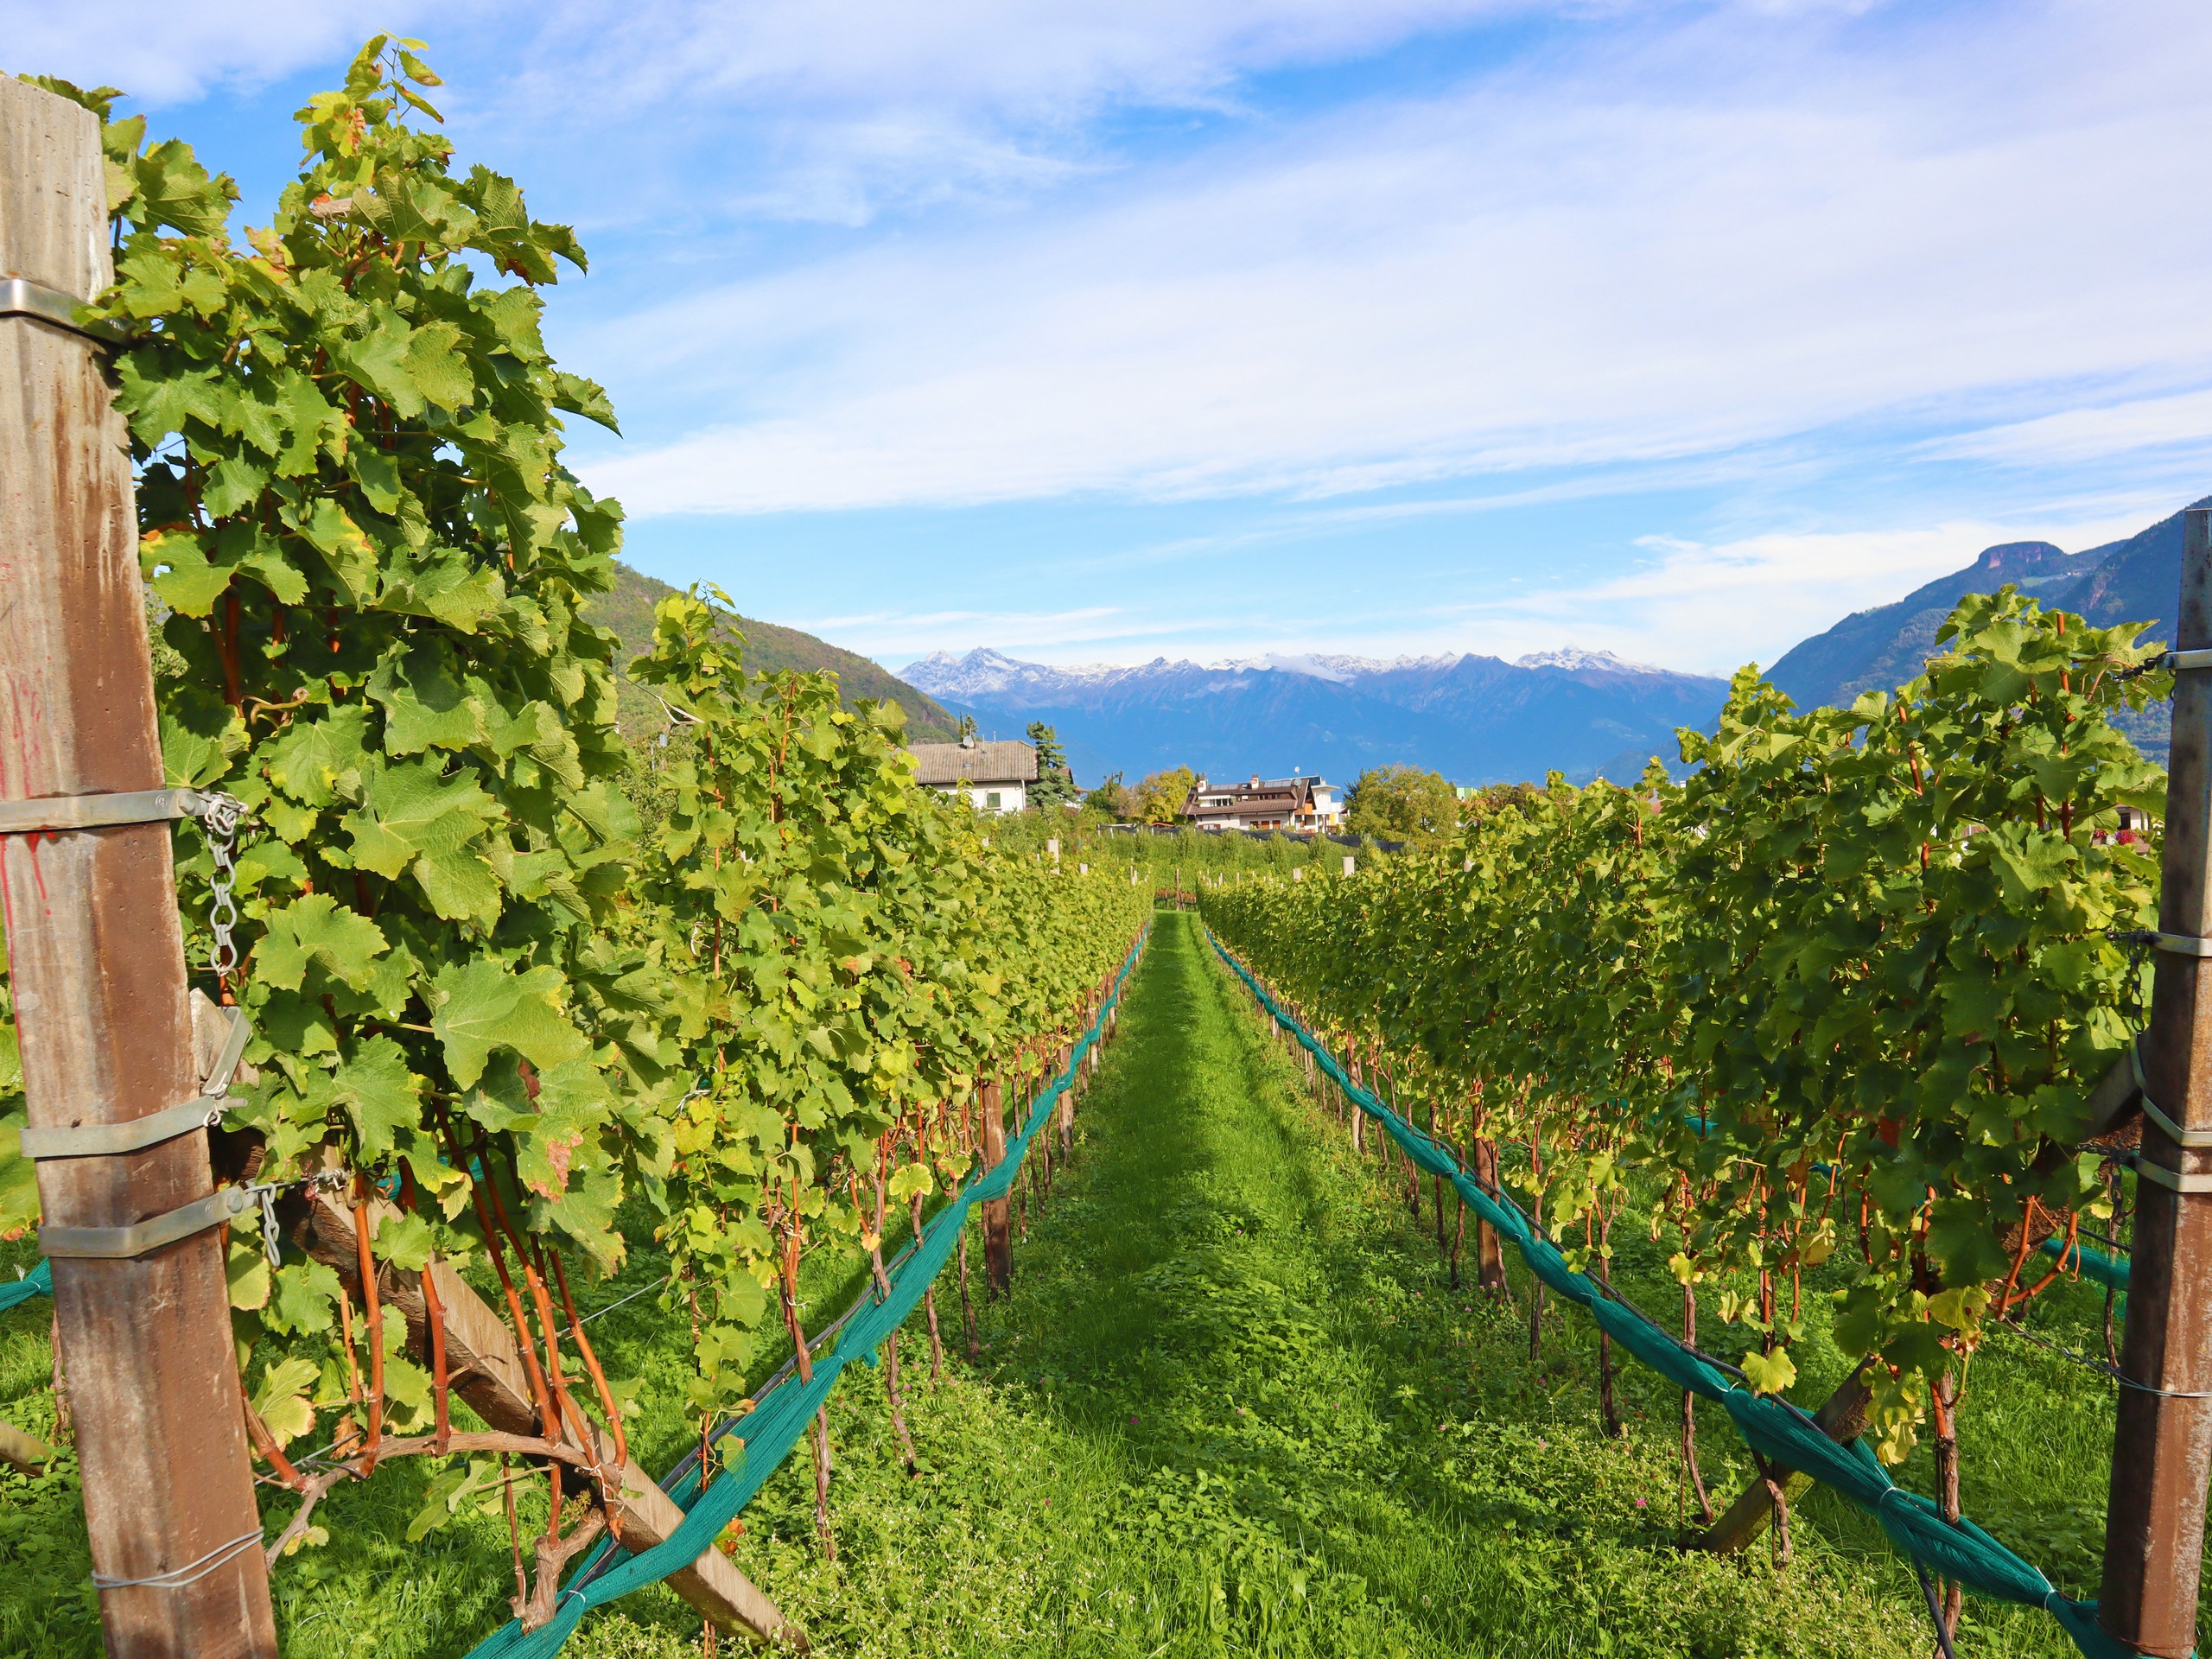 Walking among the beautiful vineyards in South Tyrol